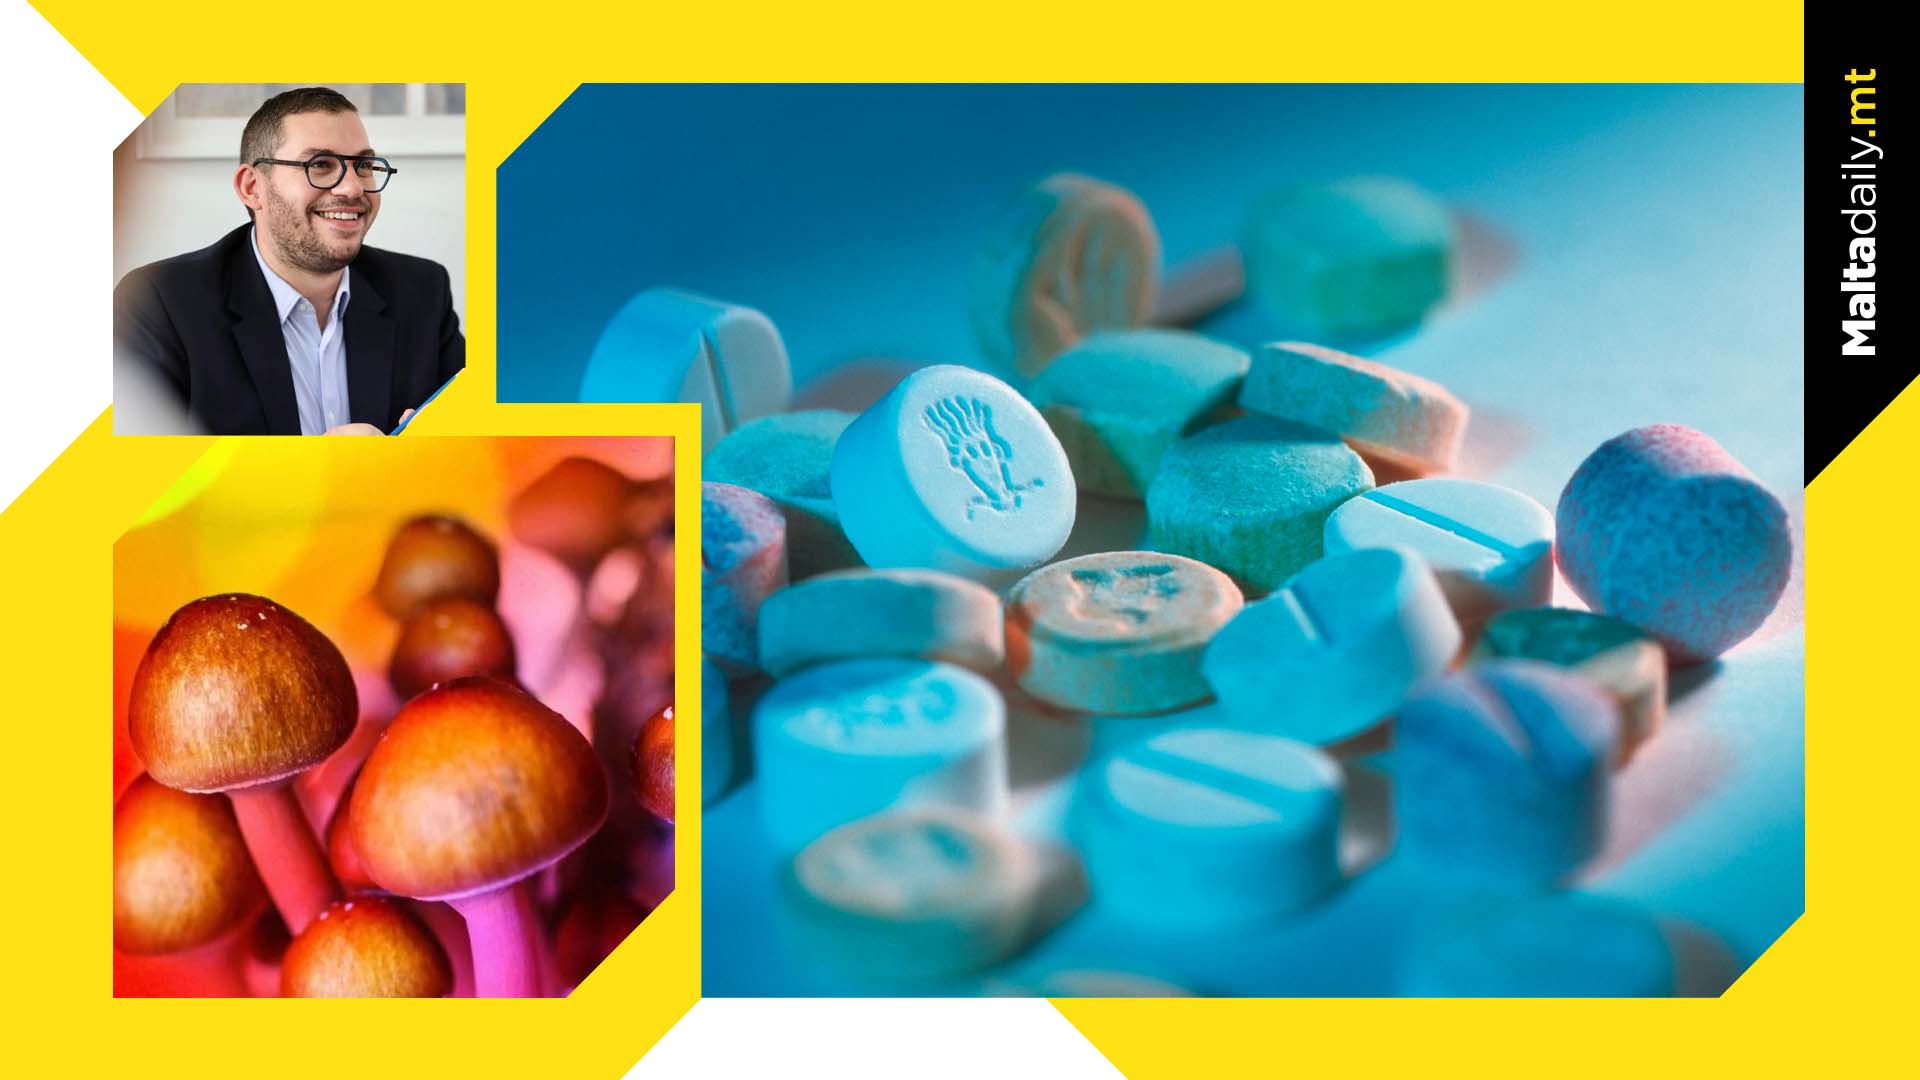 Australia approves MDMA & magic mushrooms for medical use